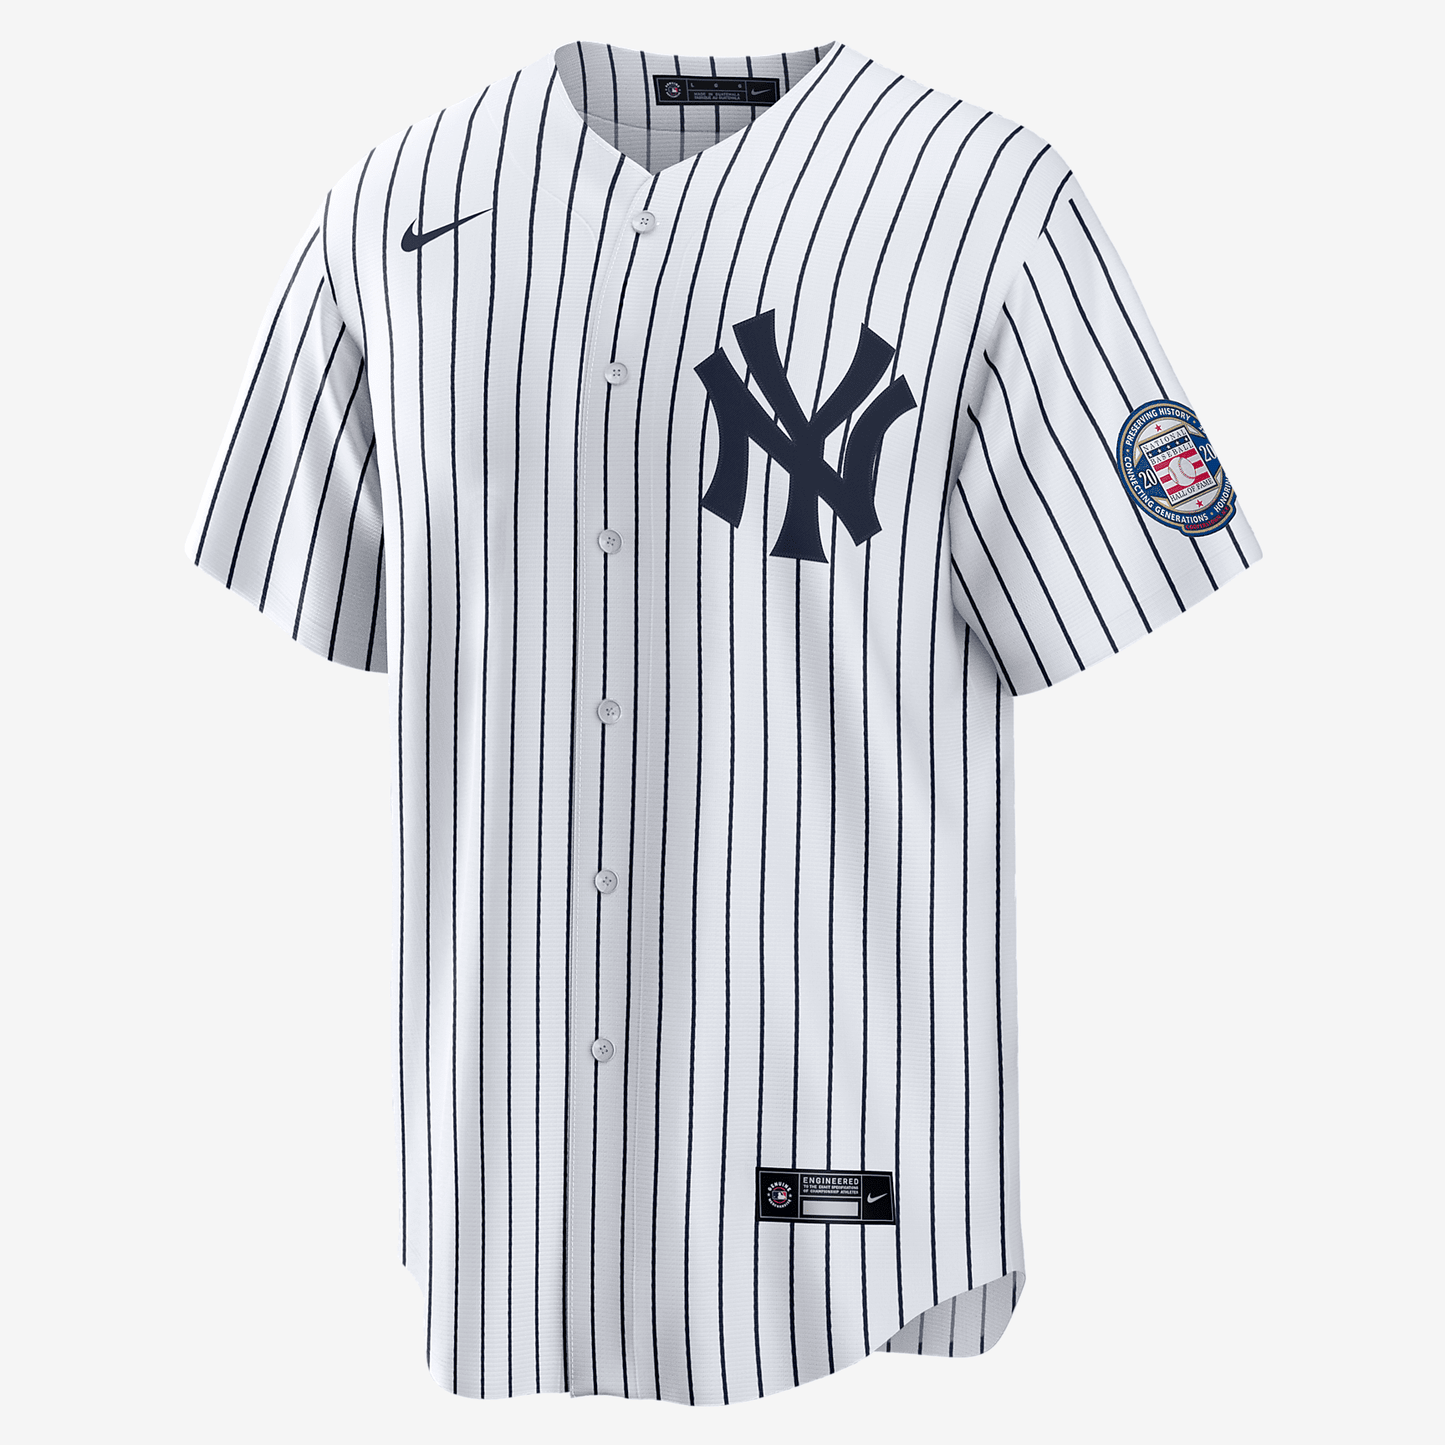 MLB New York Yankees (Derek Jeter) Men's Replica Baseball Jersey - White/Atmosphere Grey